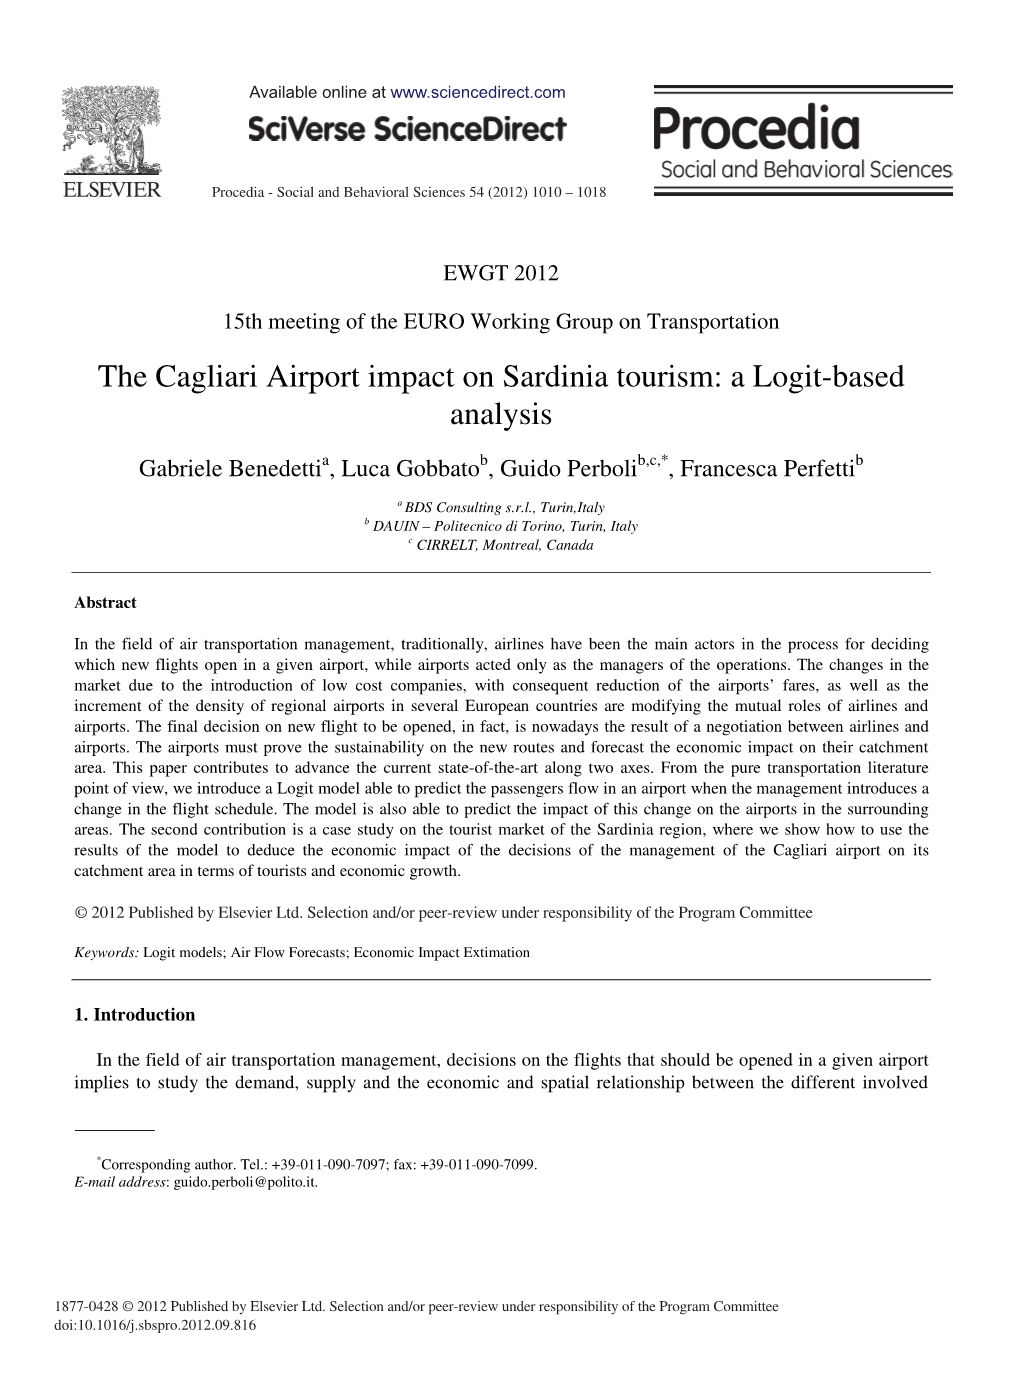 The Cagliari Airport Impact on Sardinia Tourism: a Logit-Based Analysis